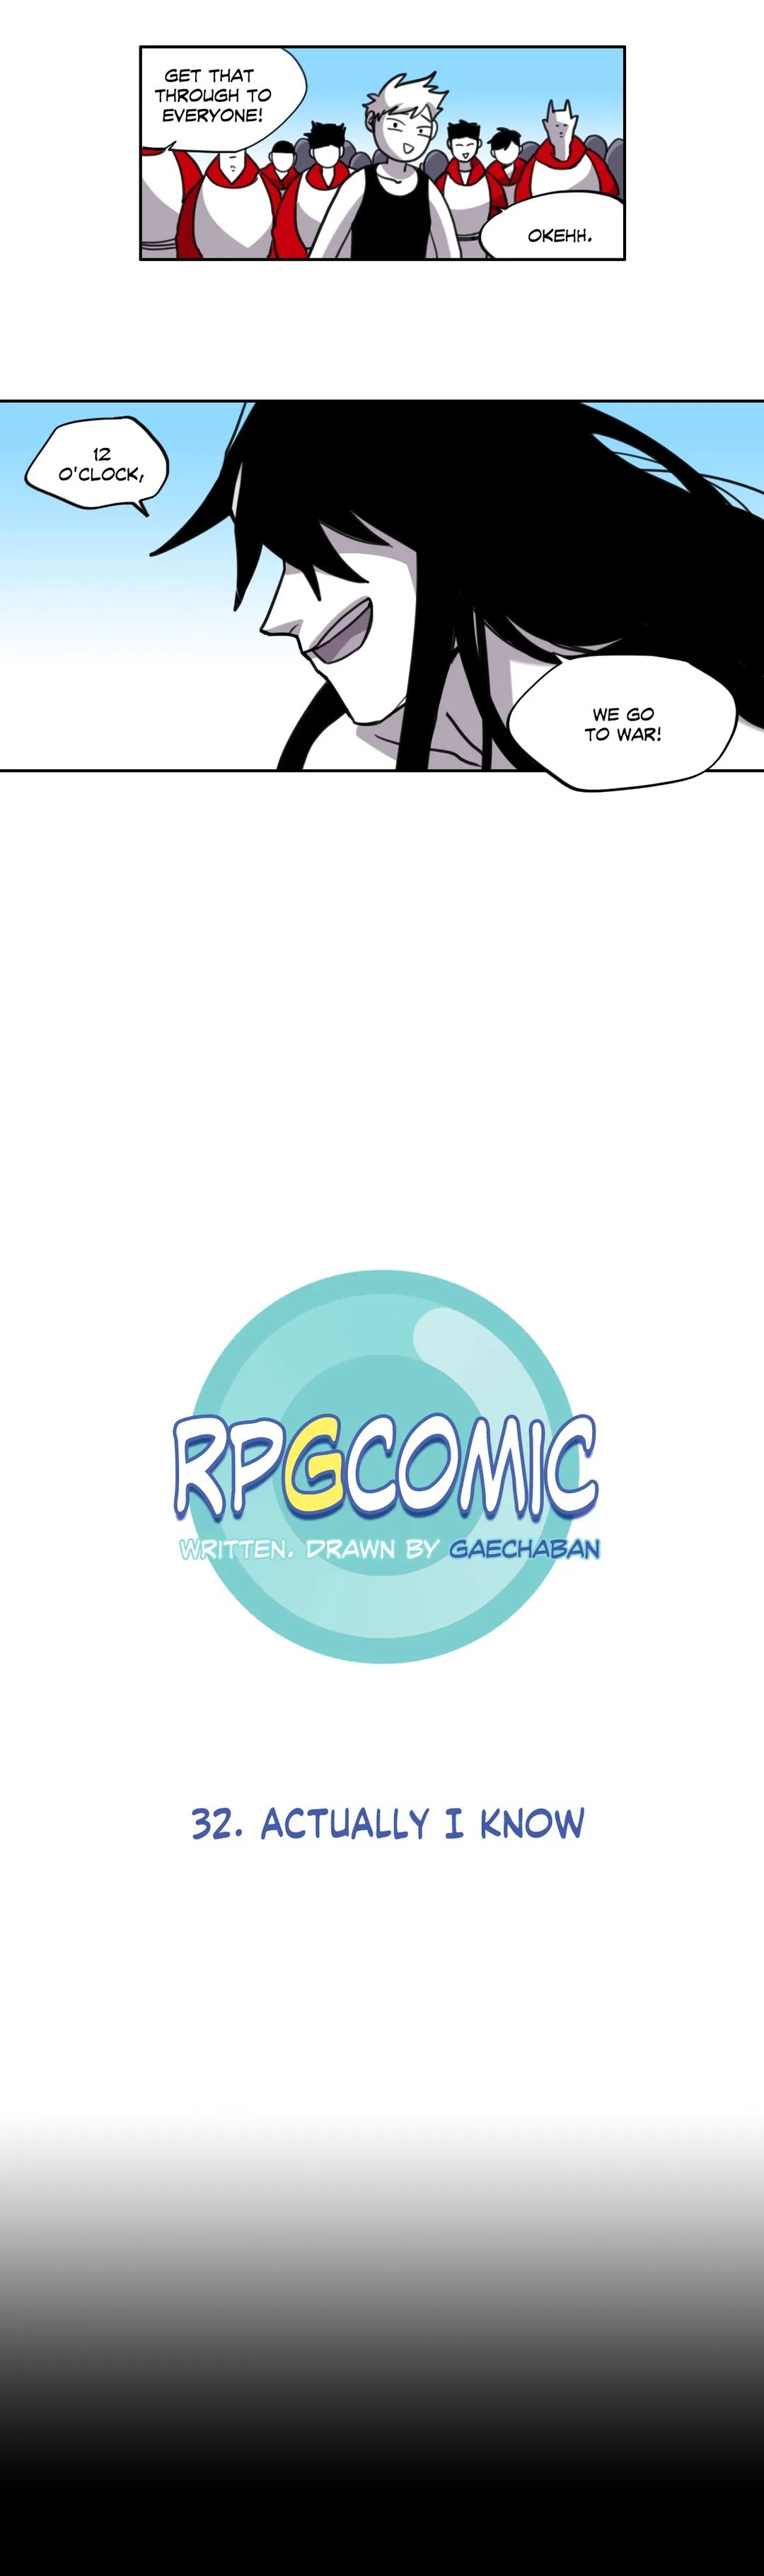 rpg-comic-chap-32-1